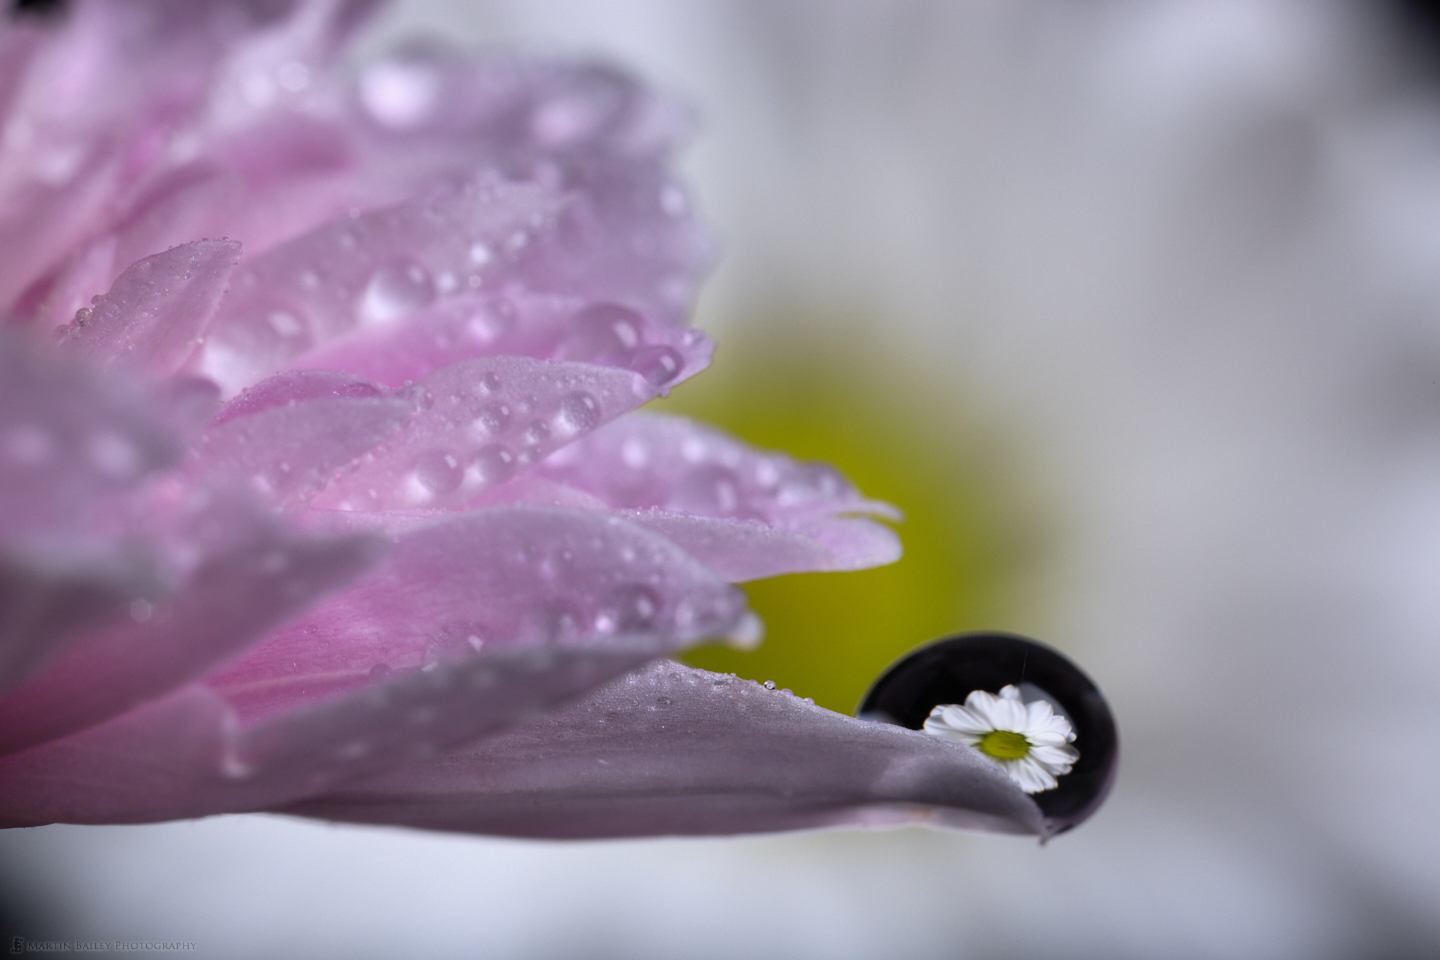 Flower in Droplet #7